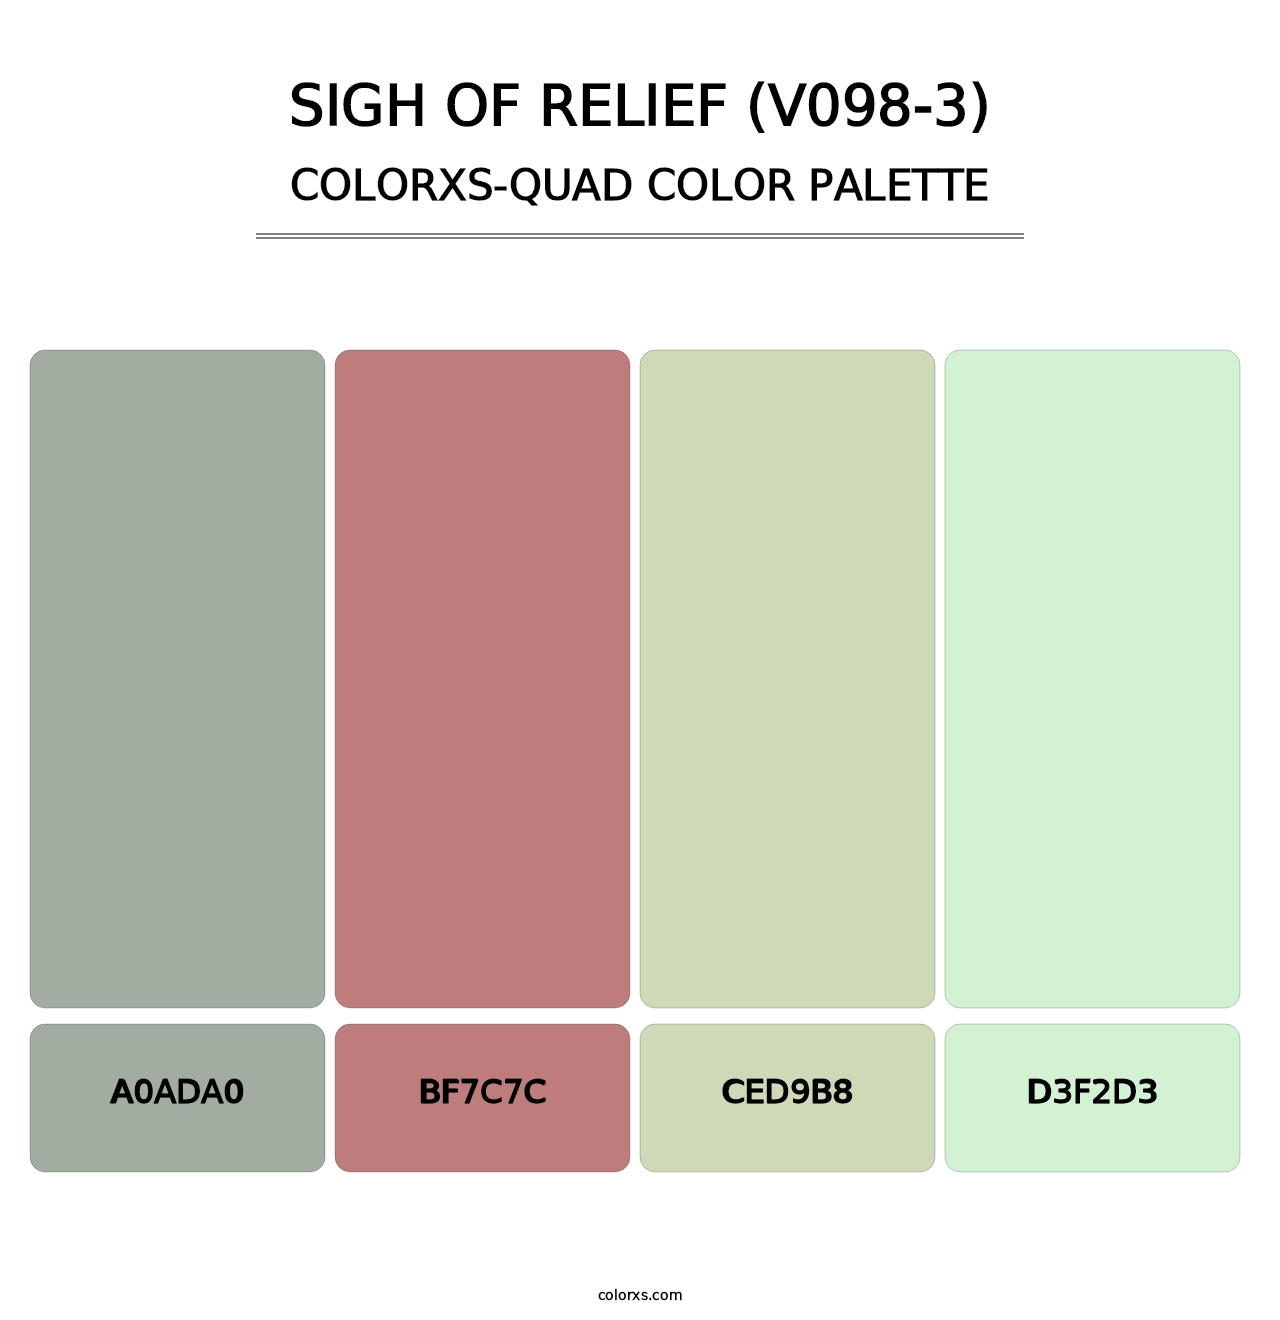 Sigh of Relief (V098-3) - Colorxs Quad Palette